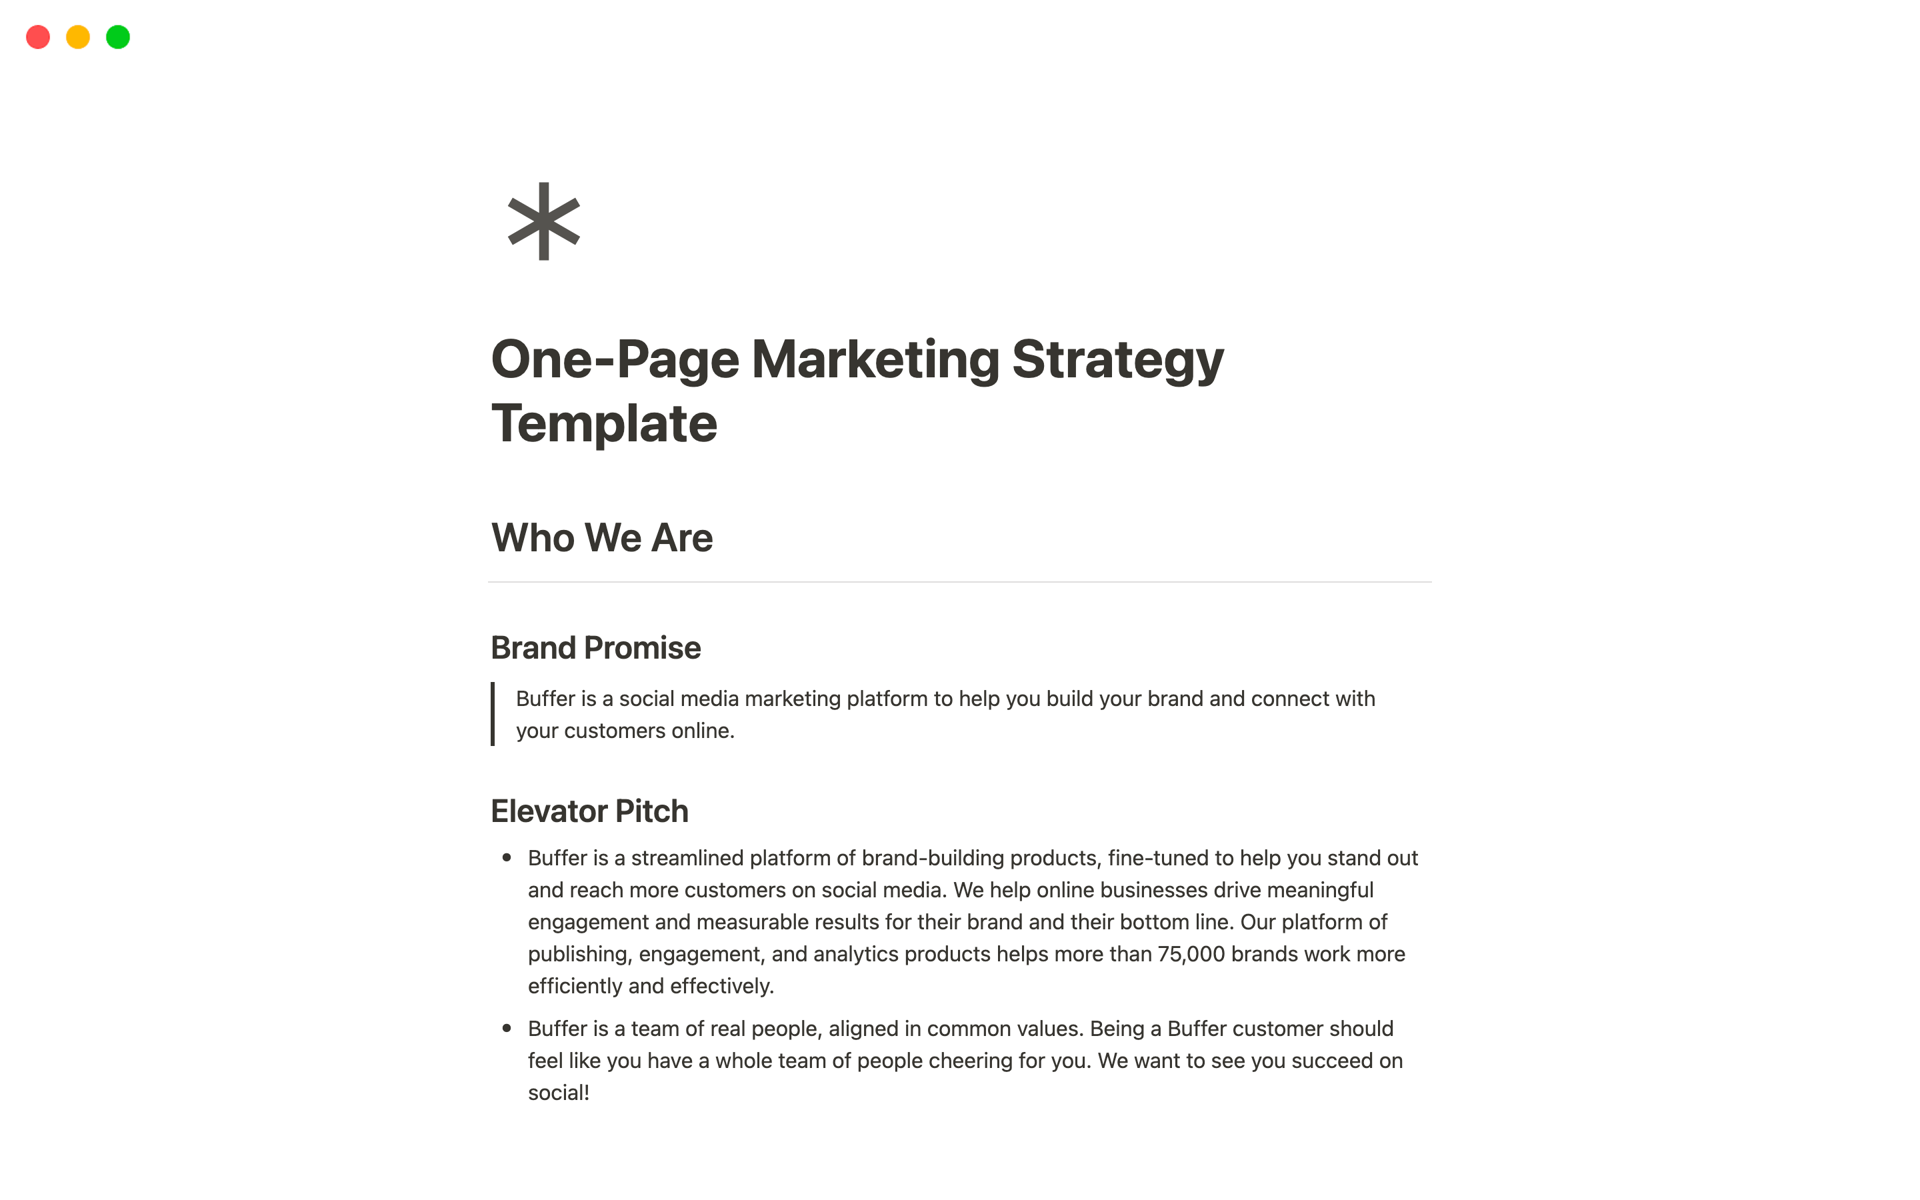 Aperçu du modèle de One-Page Marketing Strategy